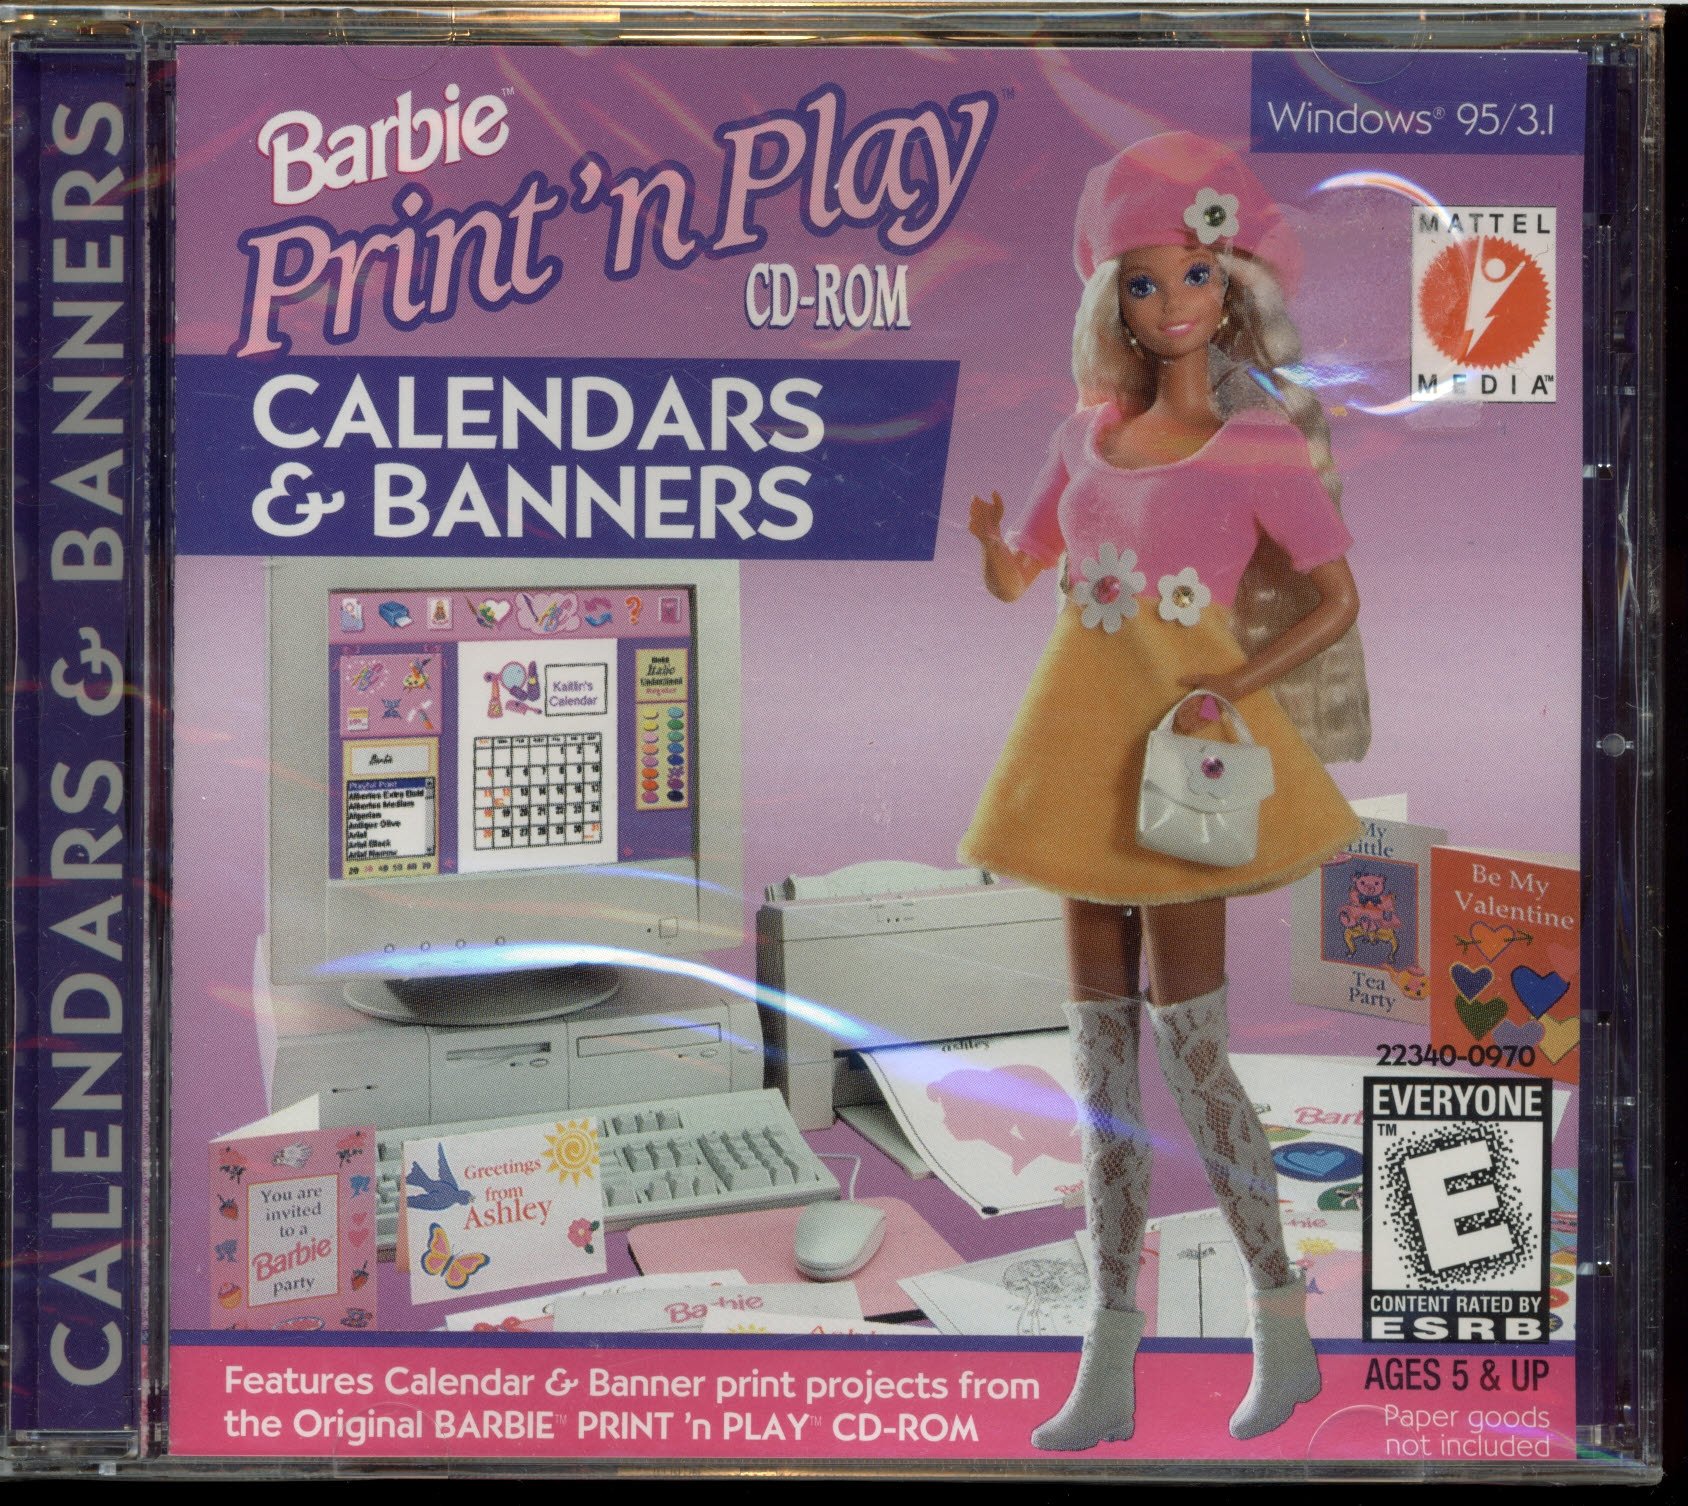 Barbie Print 'n Play Calendars & Banners